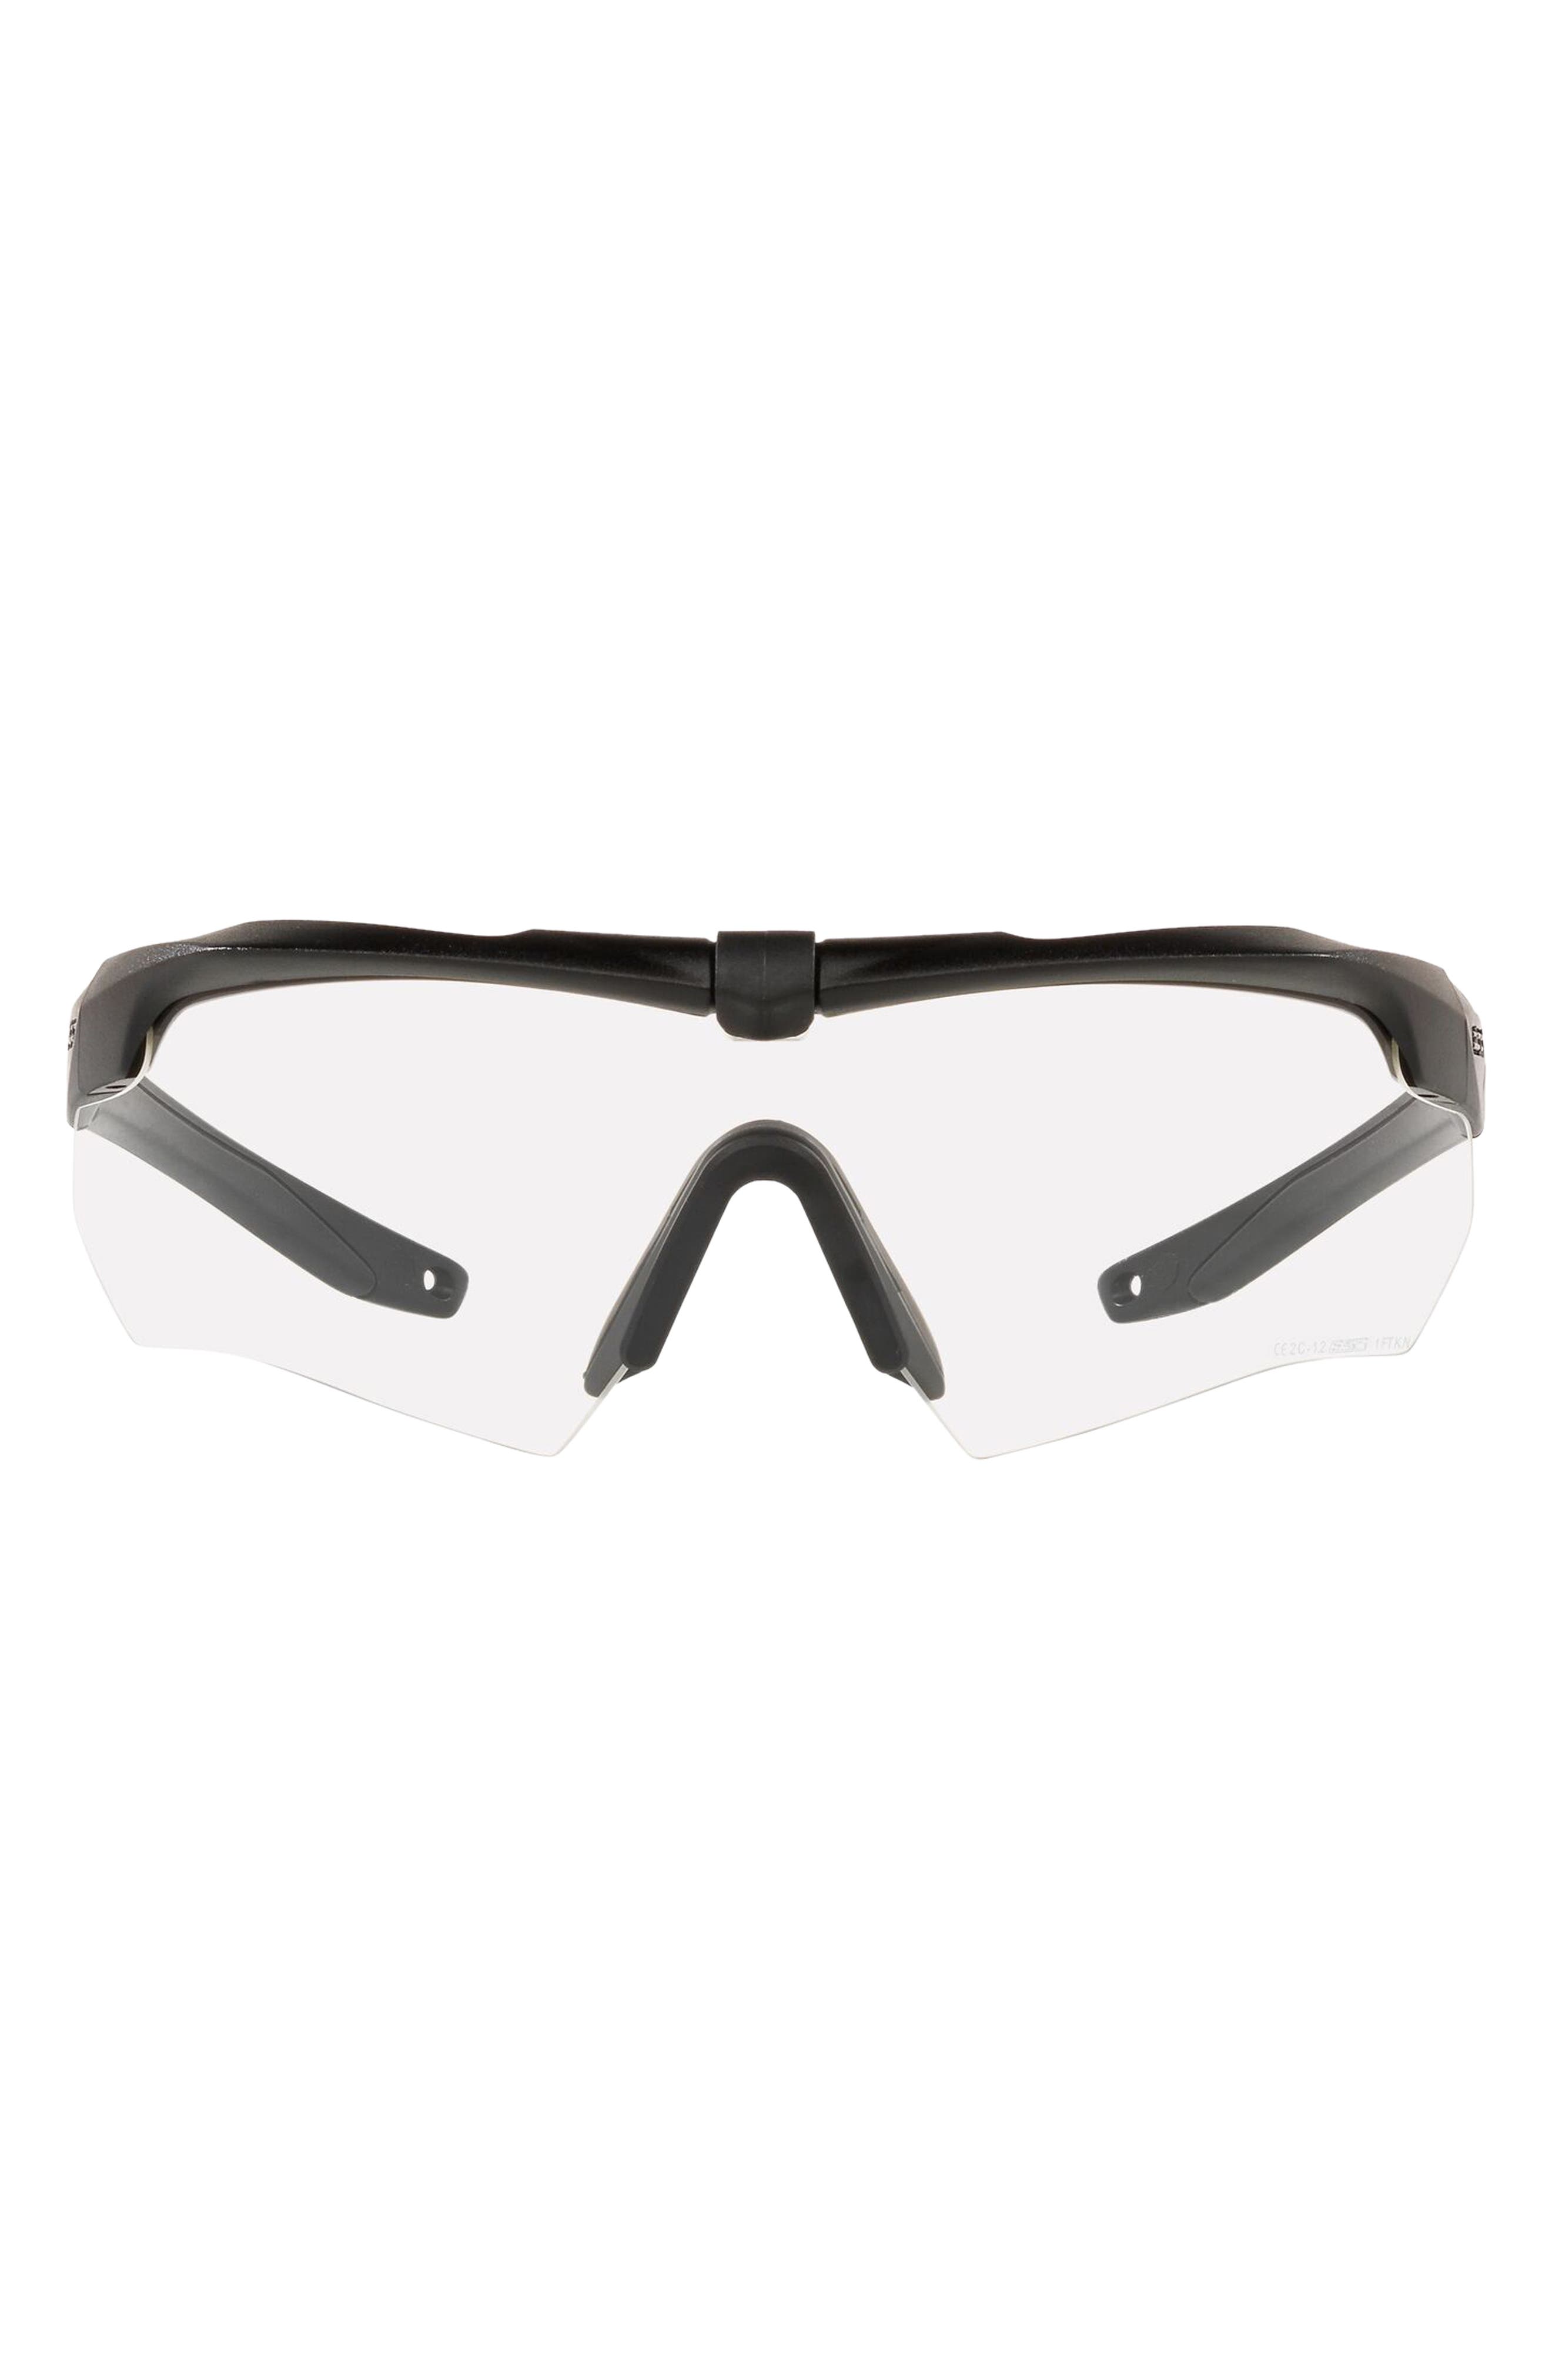 ESS 101-319-001 Crossbow Hunting Black Eyewear Goggle Gasket 